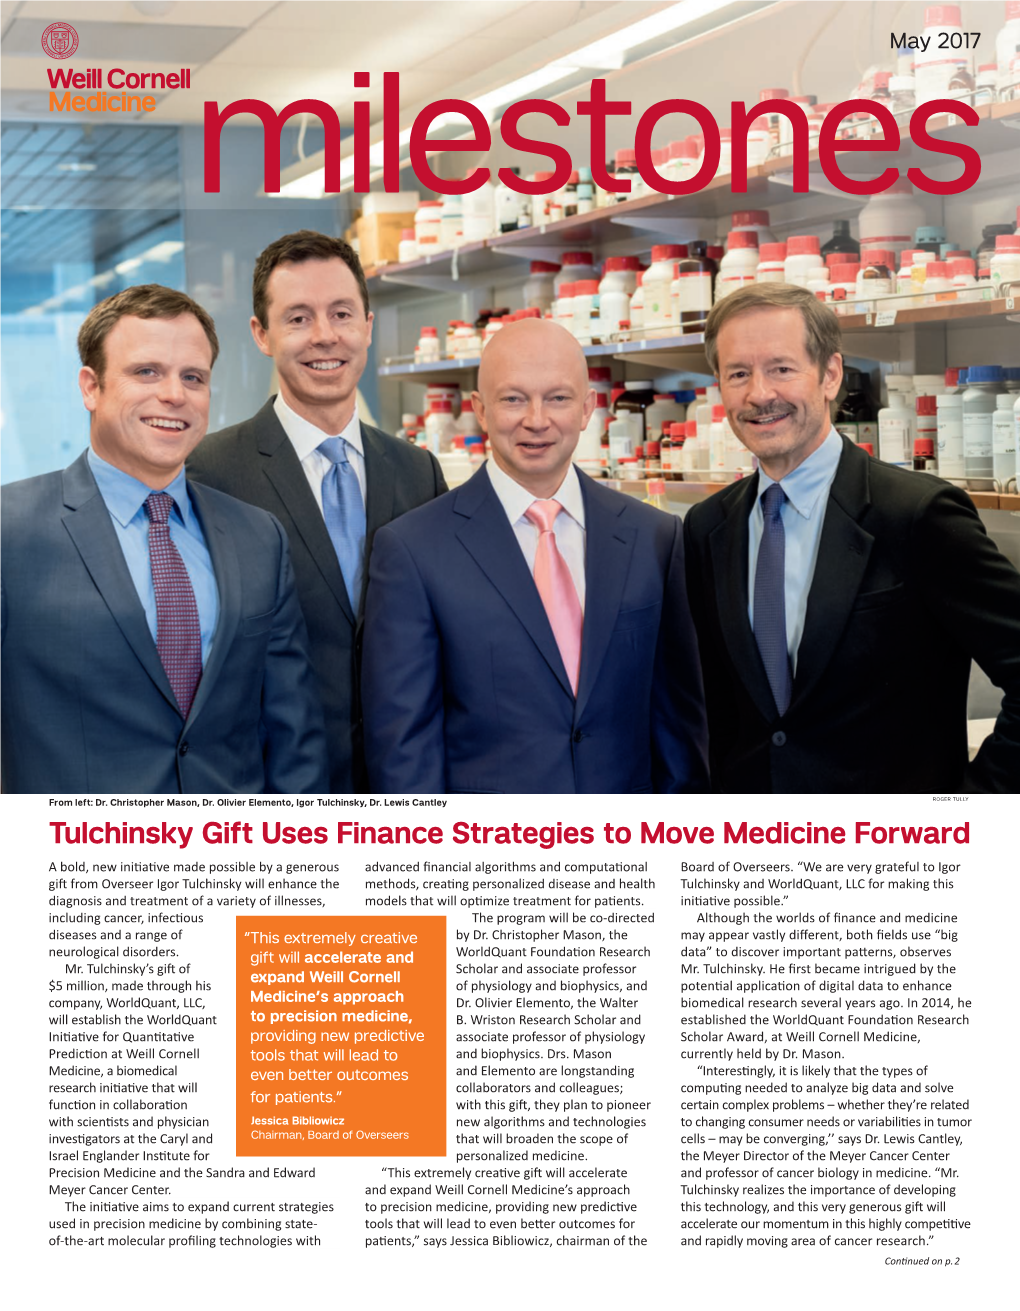 Tulchinsky Gift Uses Finance Strategies to Move Medicine Forward